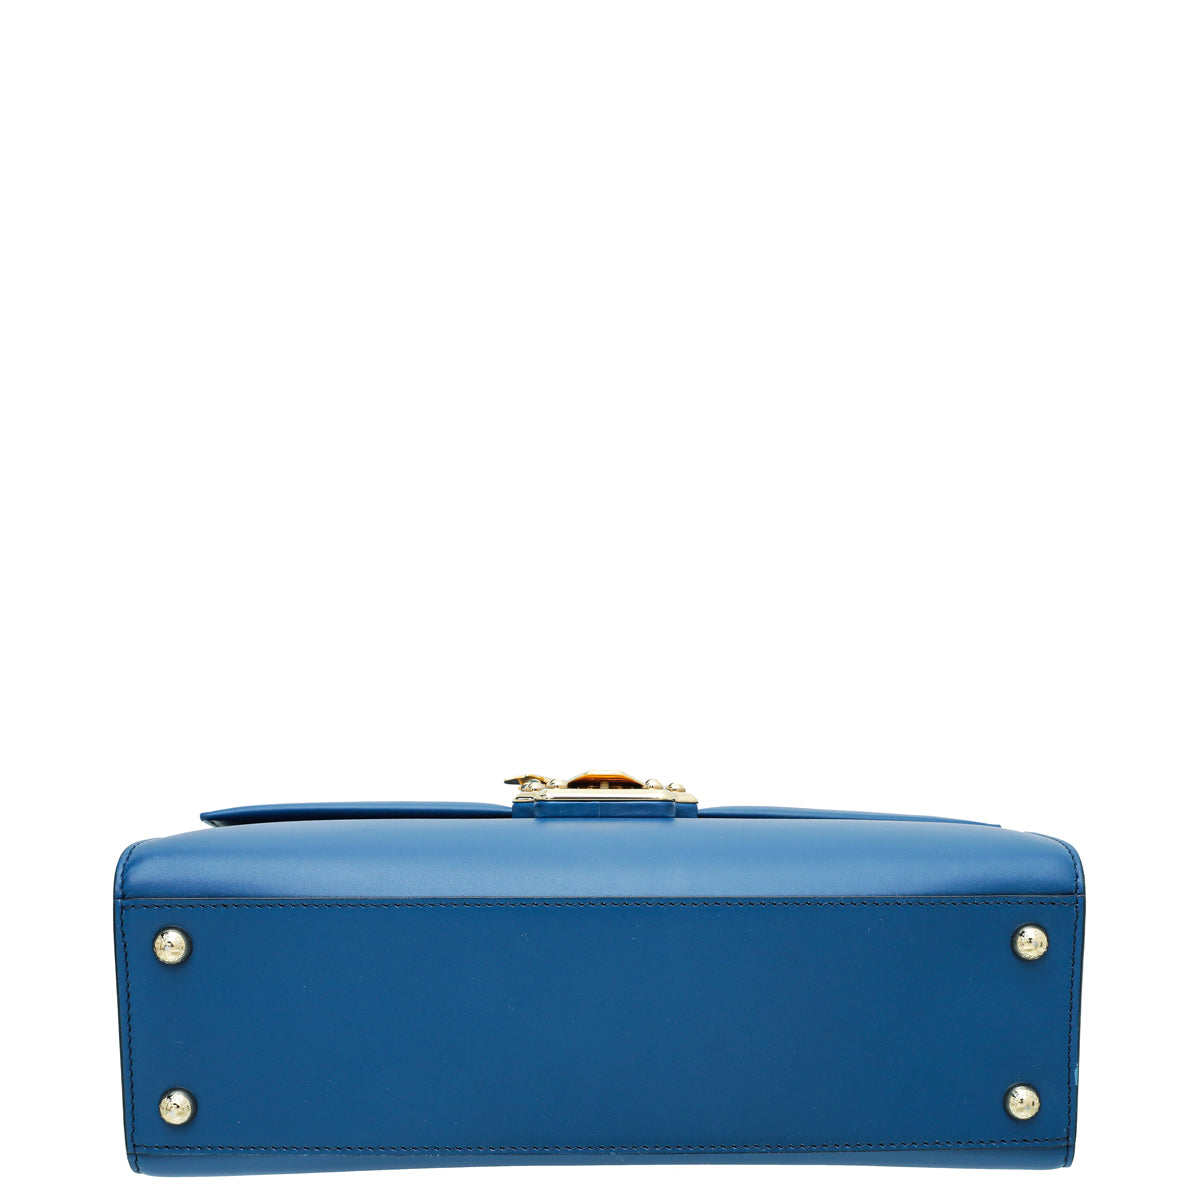 Dolce & Gabbana Blue Lucia Bee Large Bag